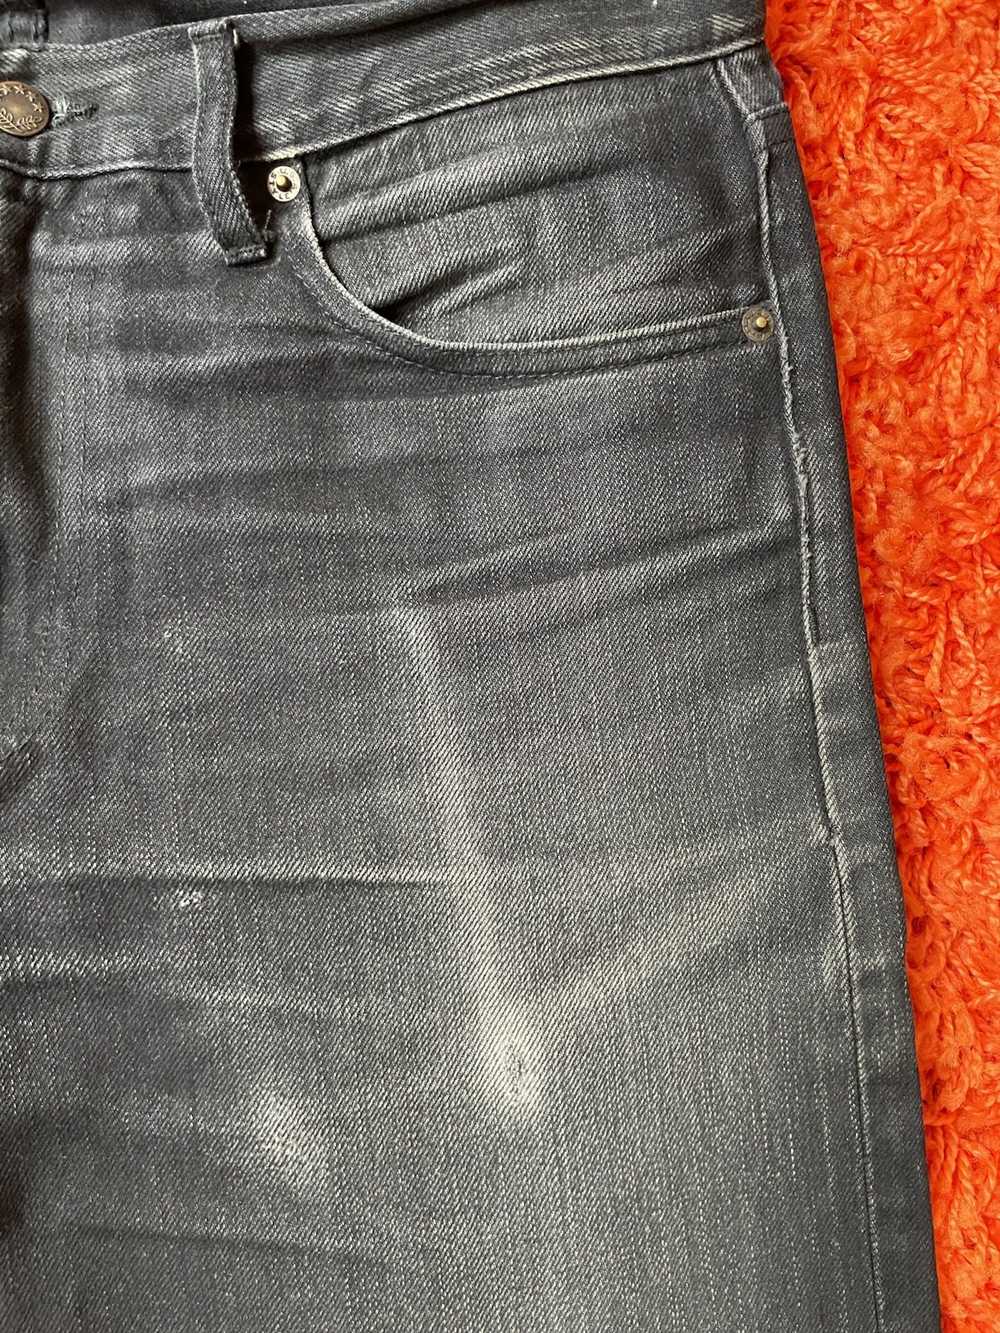 Noah Noah 5 Pocket Denim Jeans - image 3